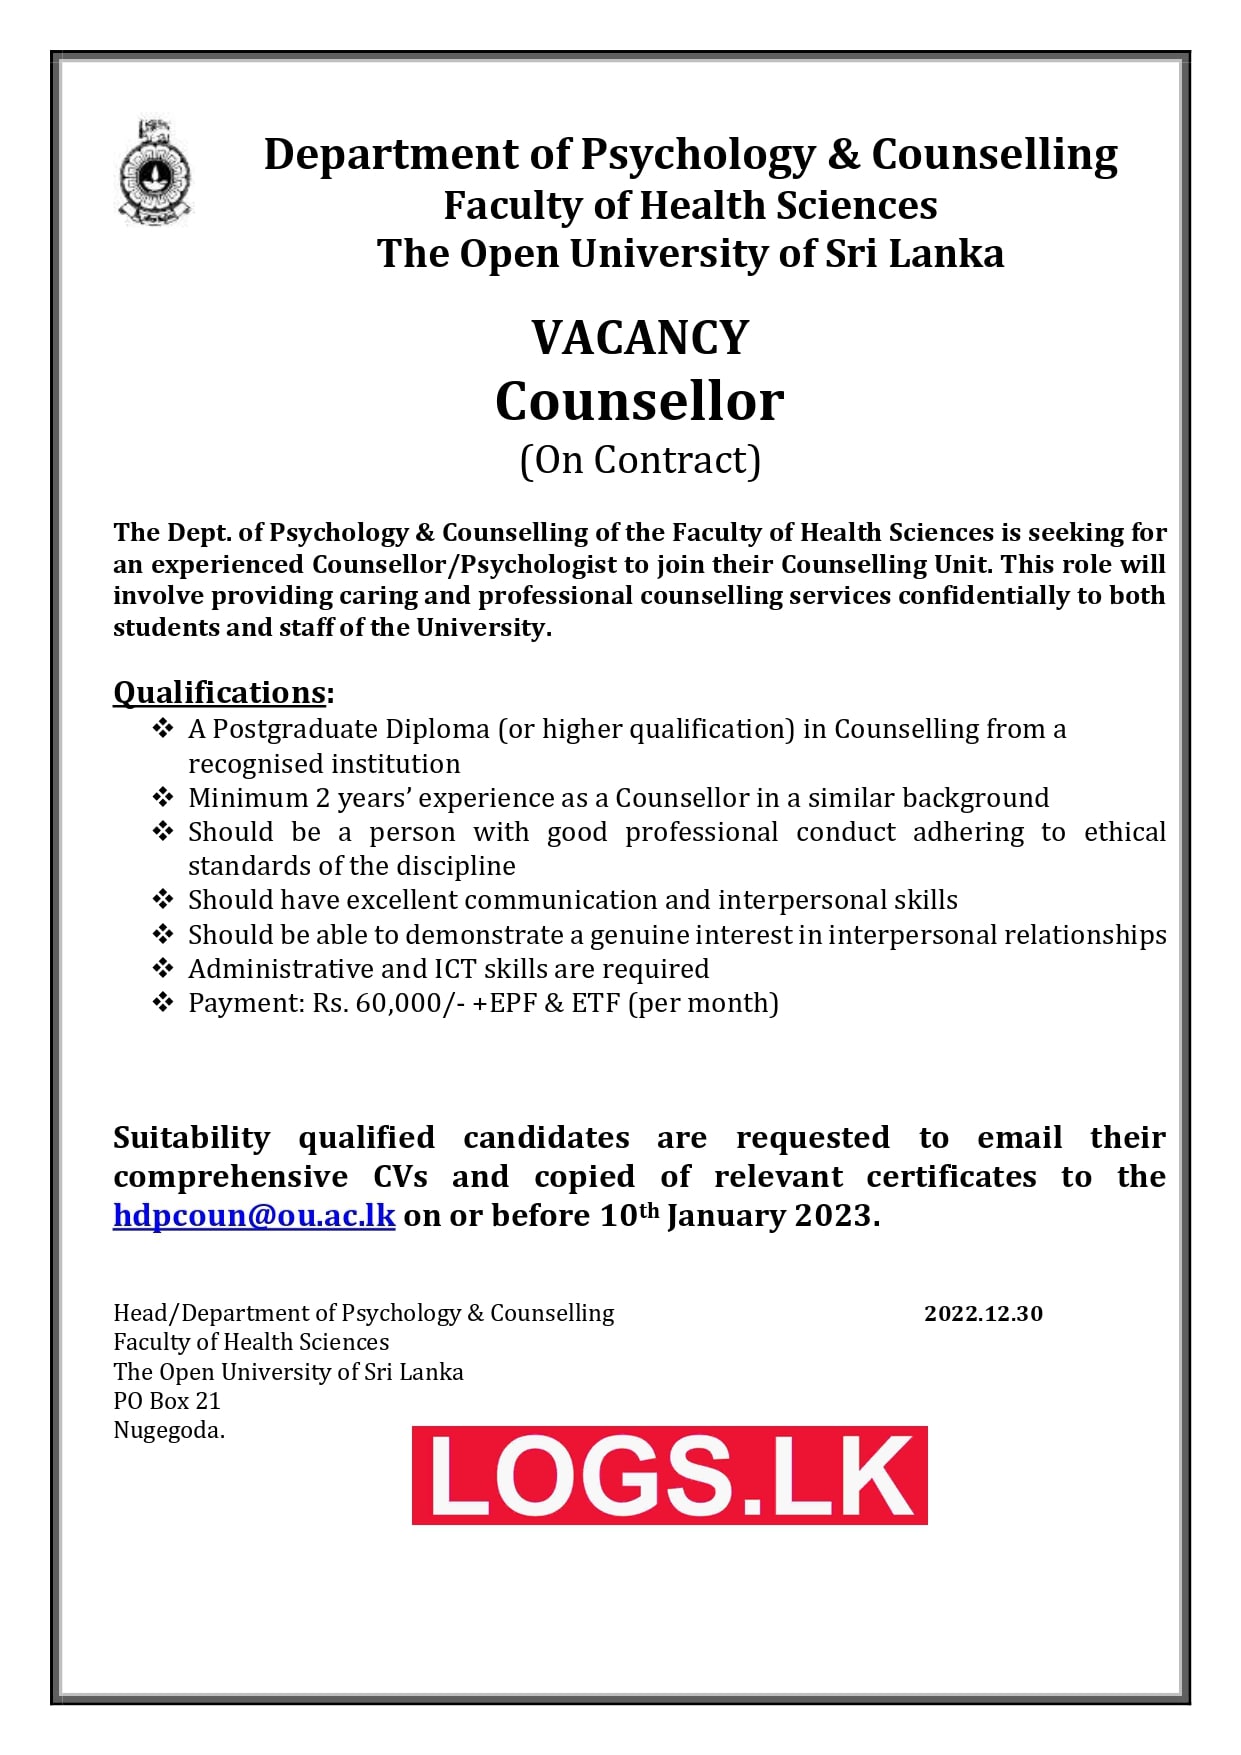 Counsellor Vacancy 2023 at Open University of Sri Lanka Job Vacancies 2023 Application Form Download